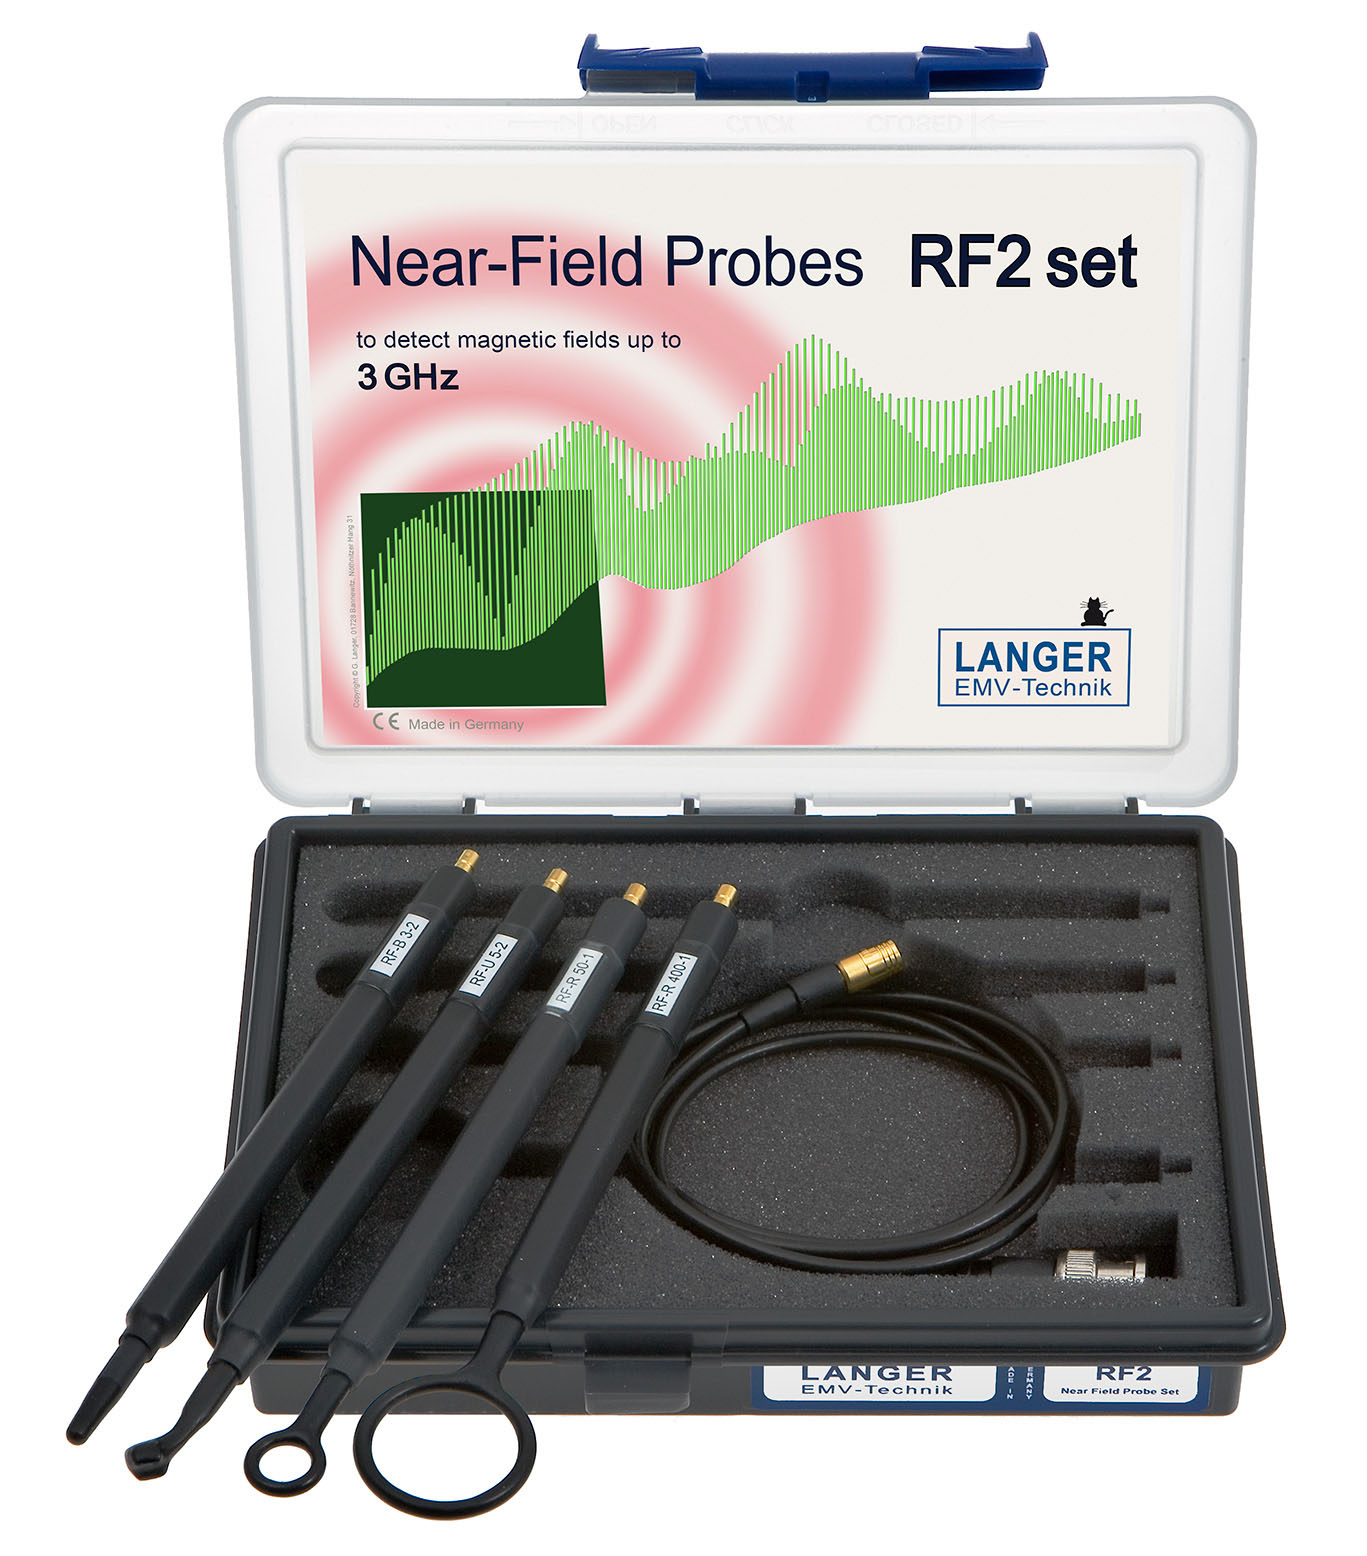 RF2 set, Near-Field Probes 30 MHz up to 3 GHz